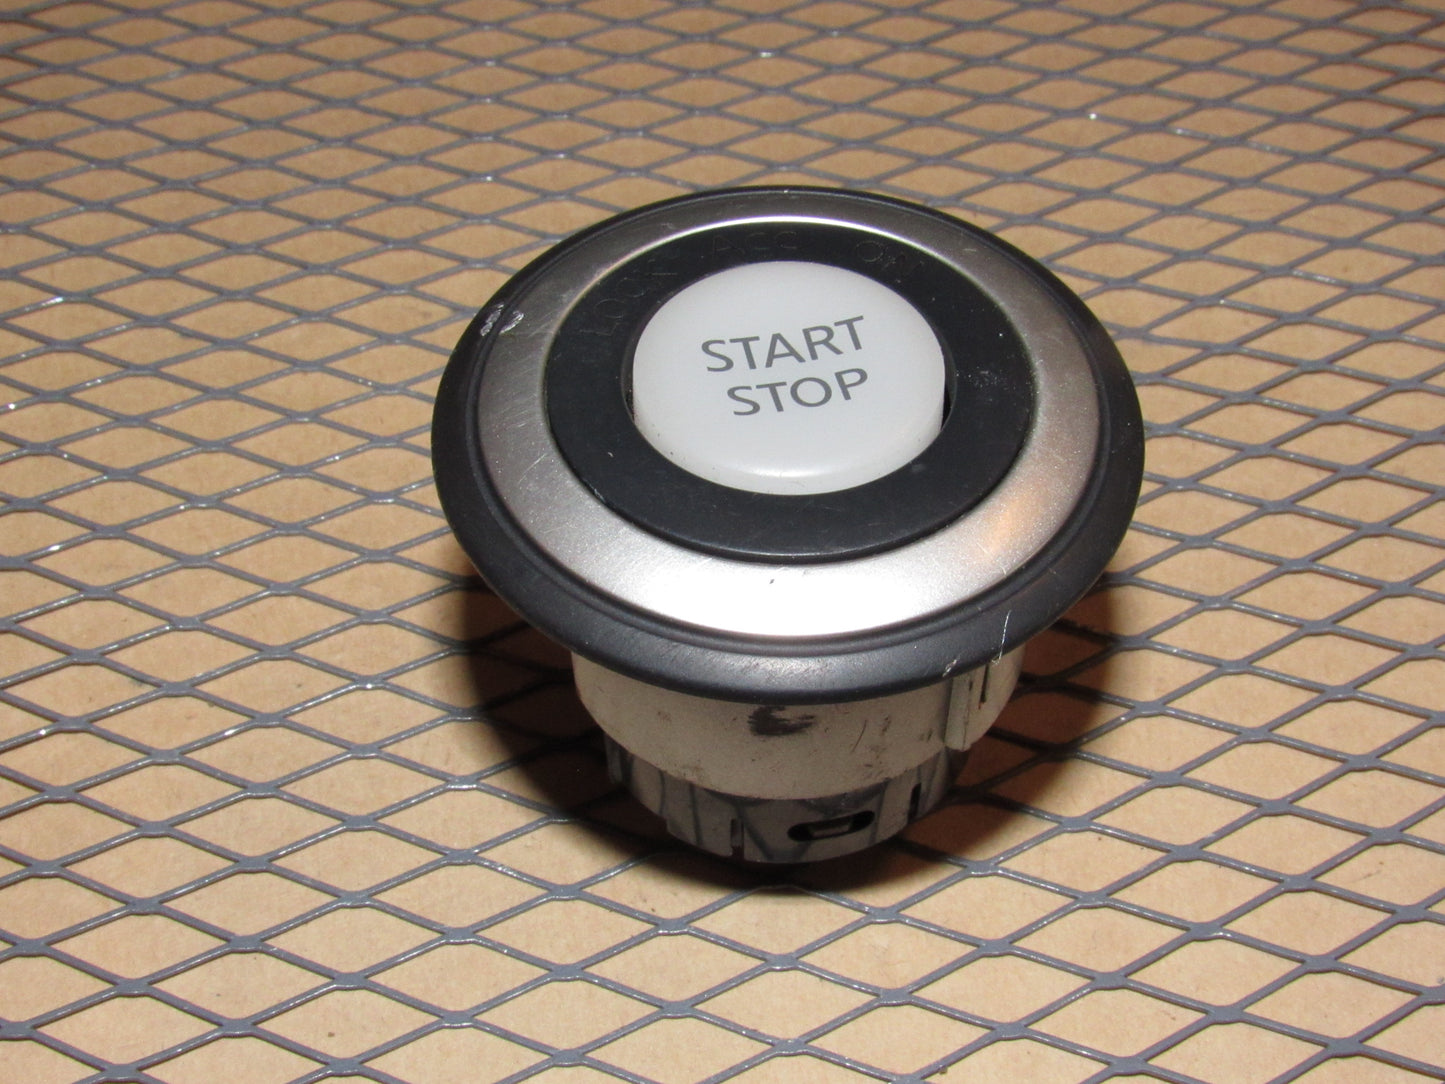 09-21 Nissan 370Z OEM Ignition Engine Start Stop Push Button Switch